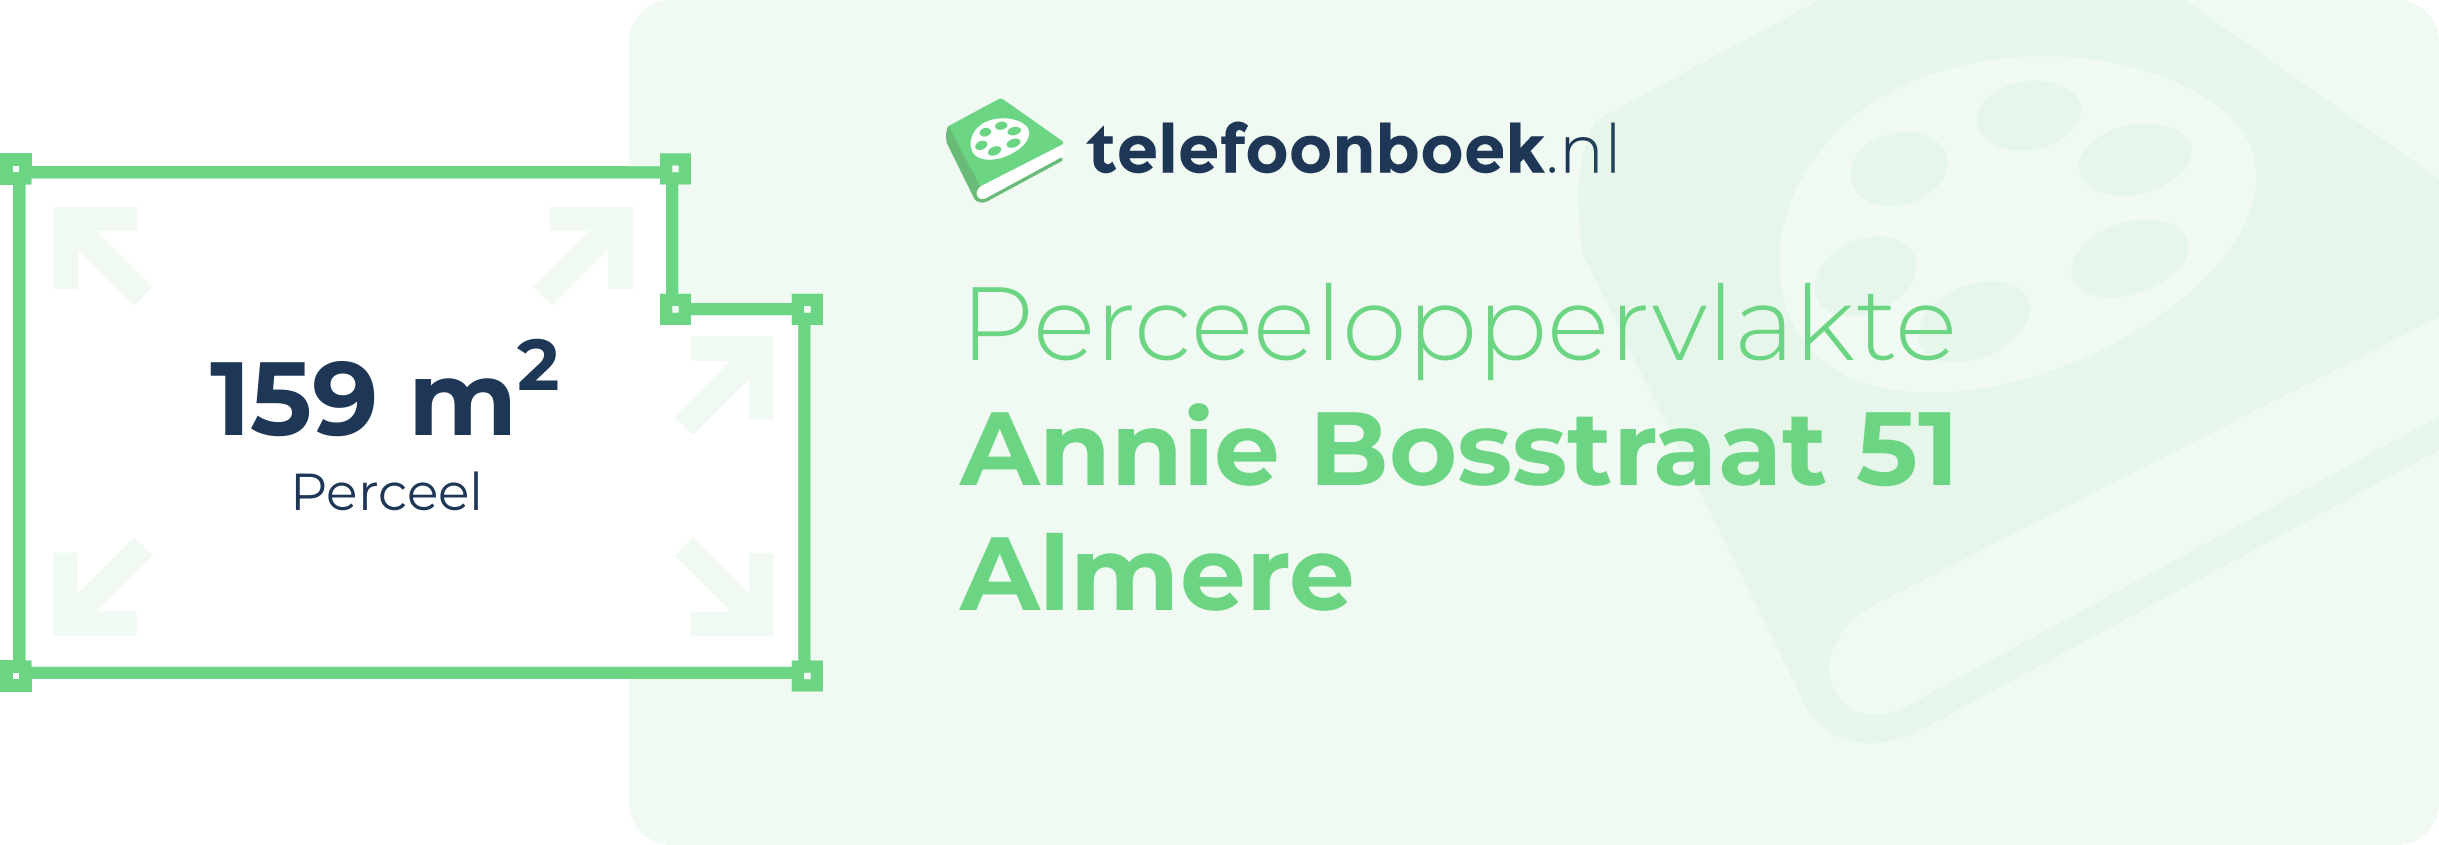 Perceeloppervlakte Annie Bosstraat 51 Almere